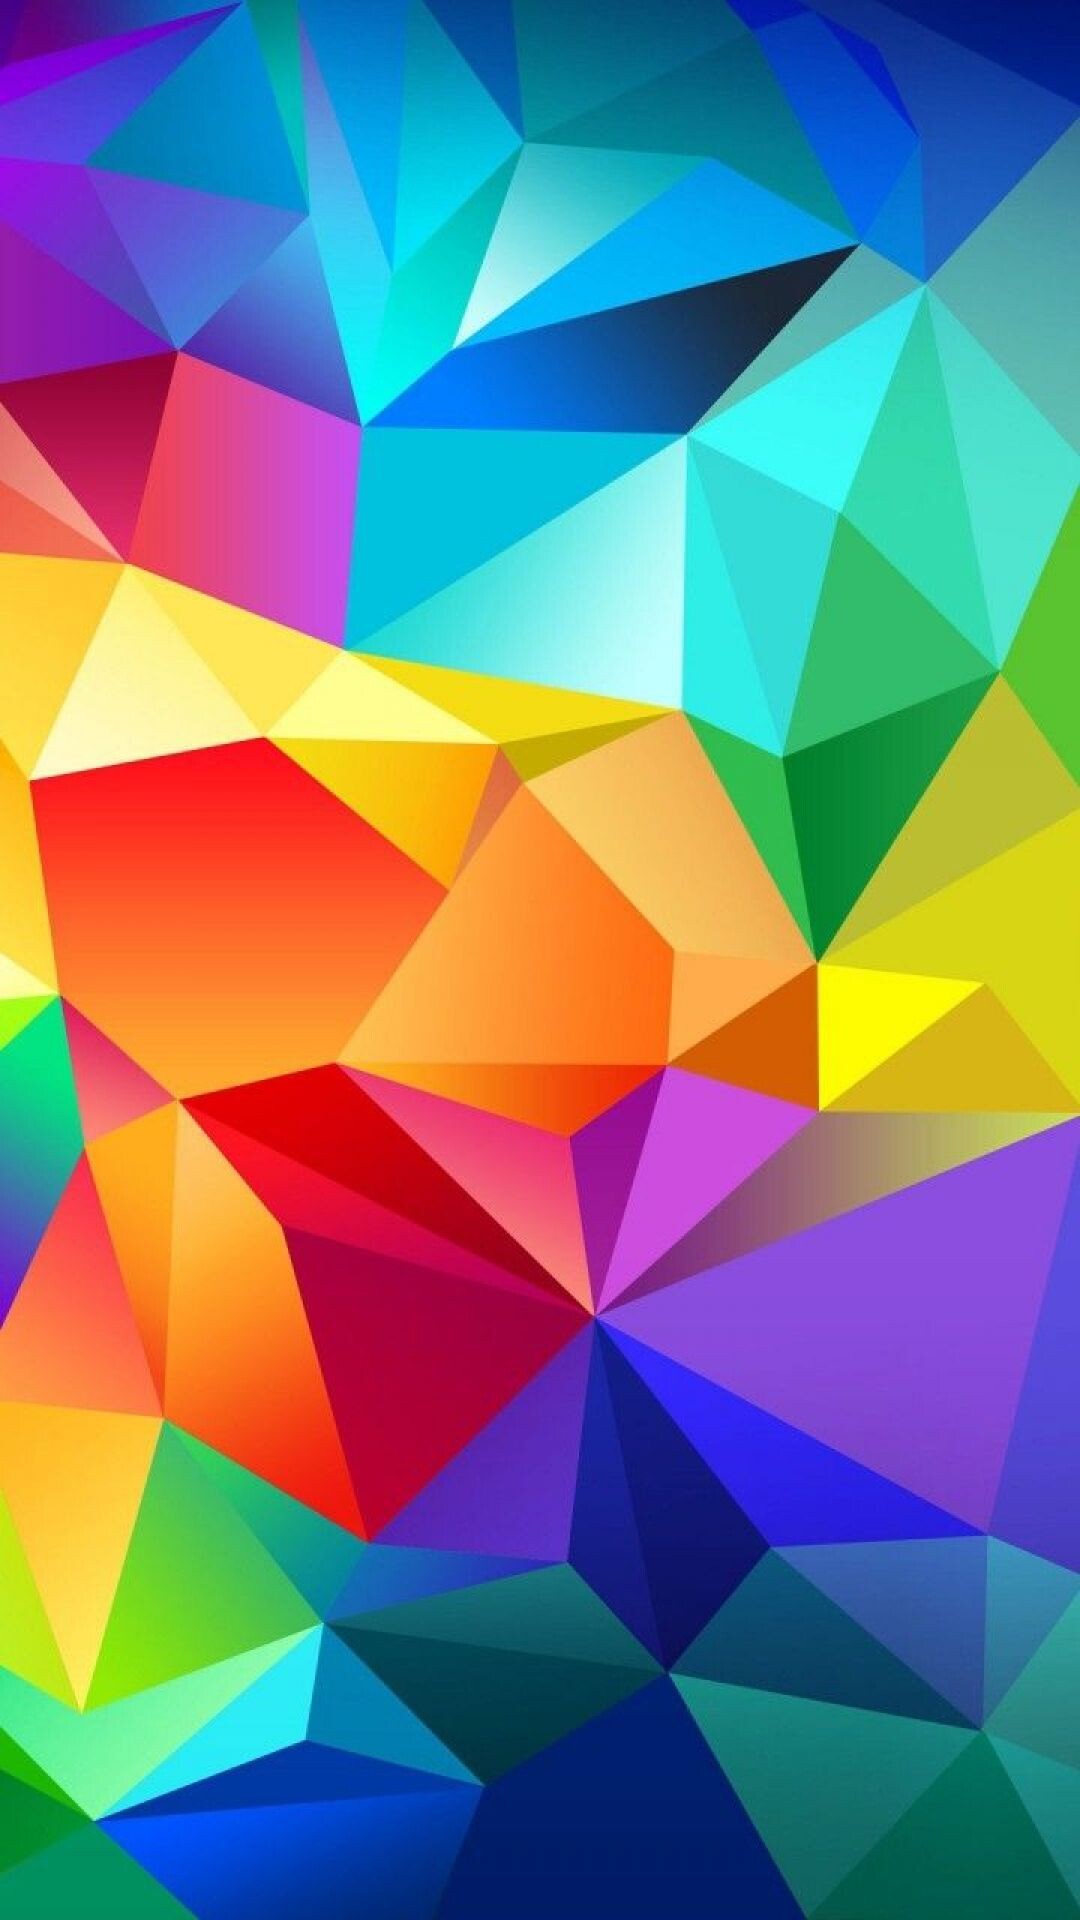 Geometric Abstract: Rainbow polygonal figures, Heptagons, Pyramids. 1080x1920 Full HD Wallpaper.